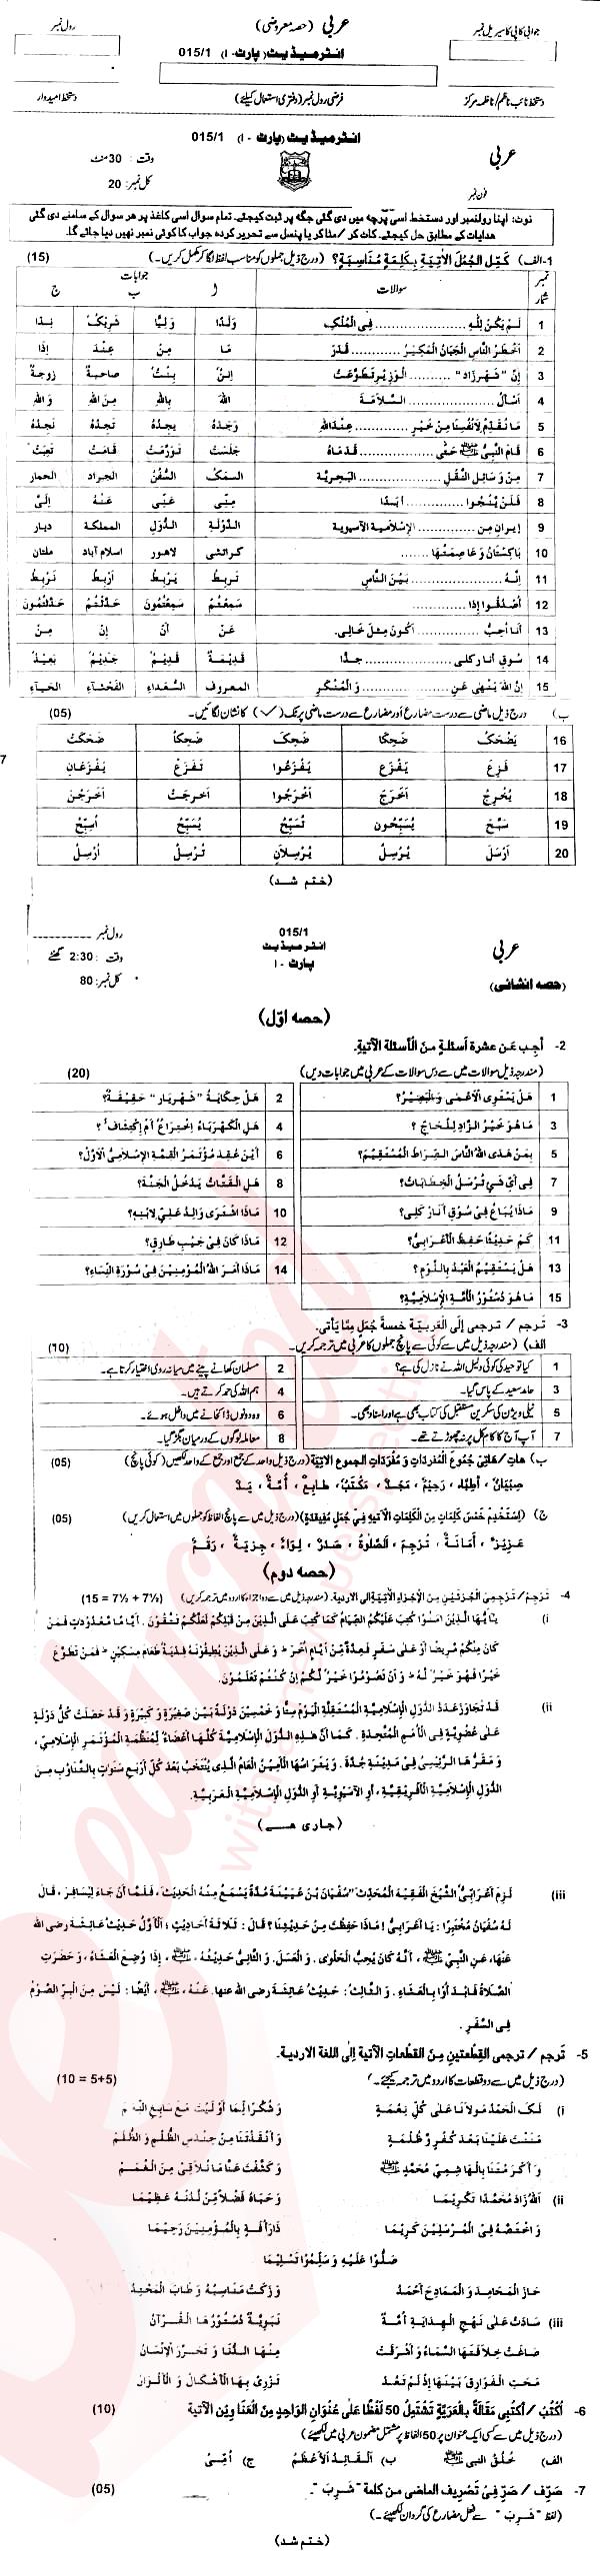 Arabic FA Part 1 Past Paper Group 1 BISE AJK 2015